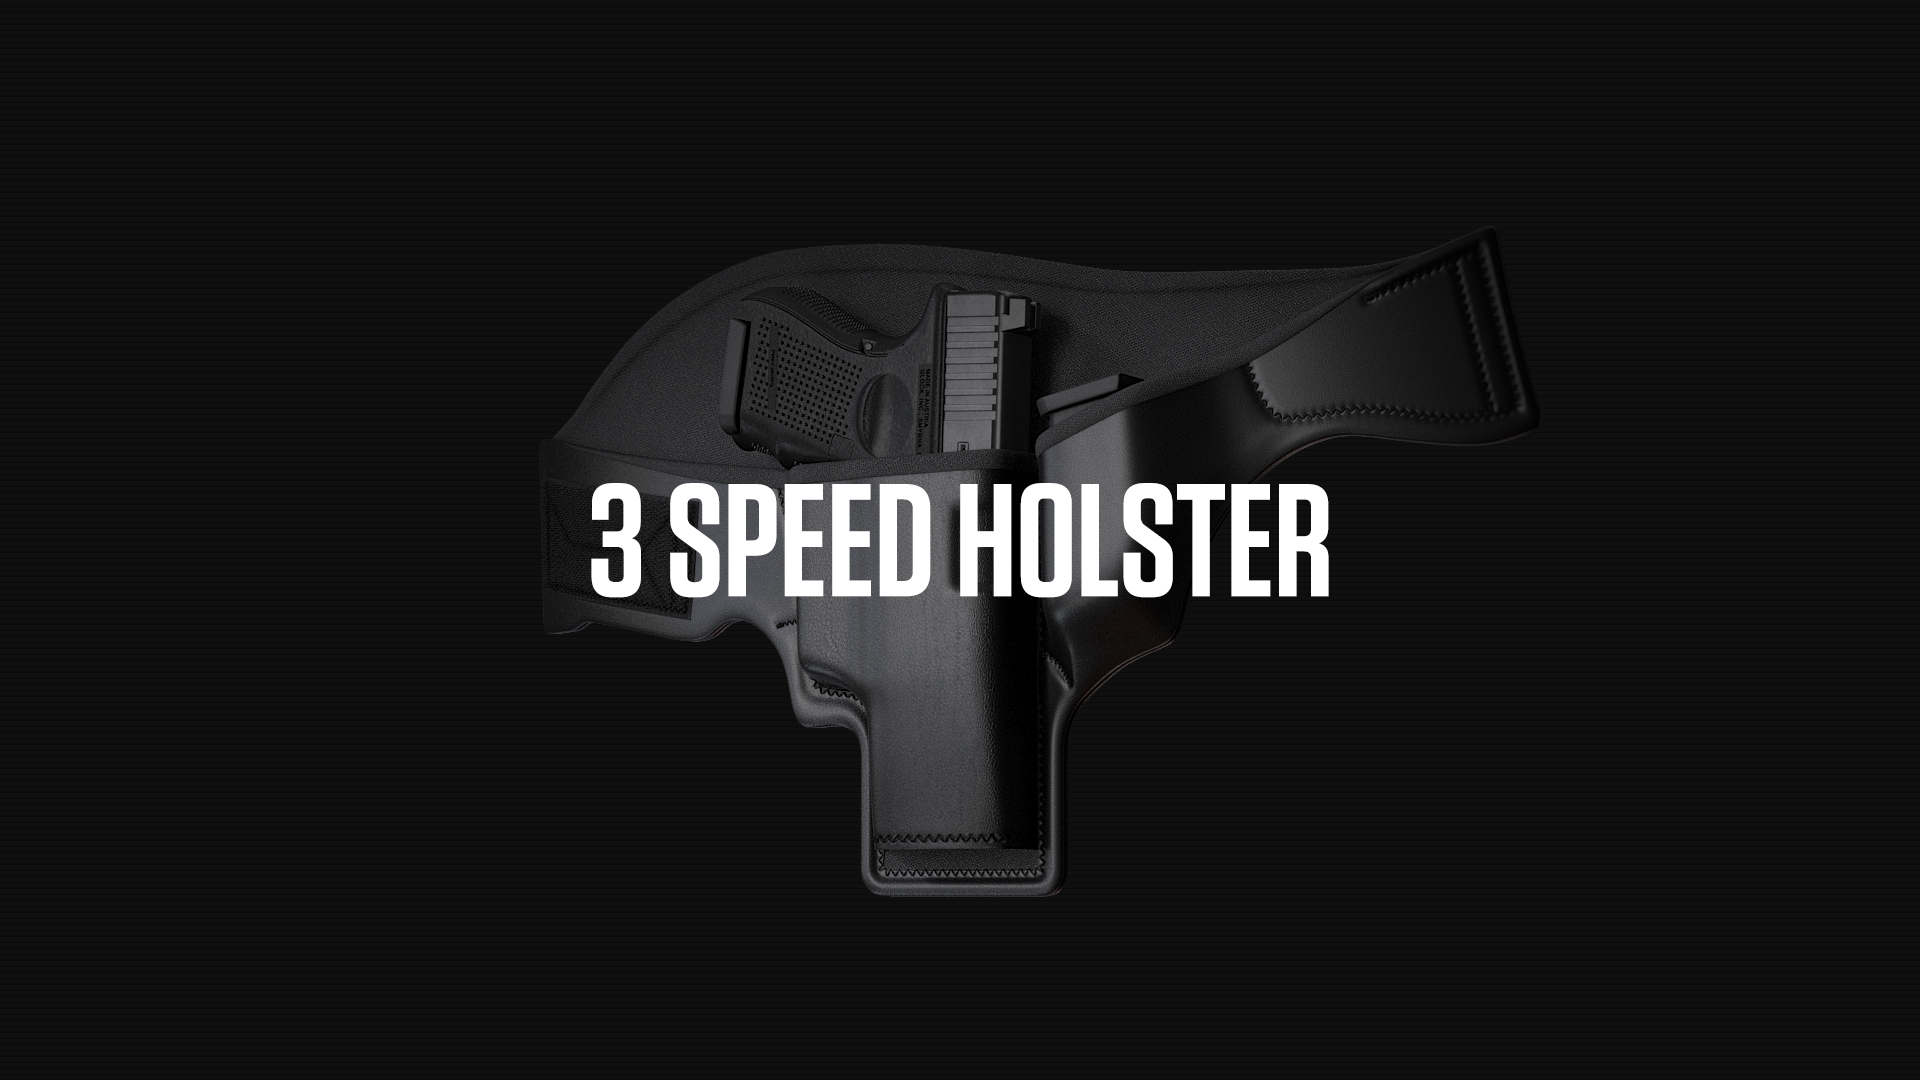 3 Speed Holster Website Design and Development